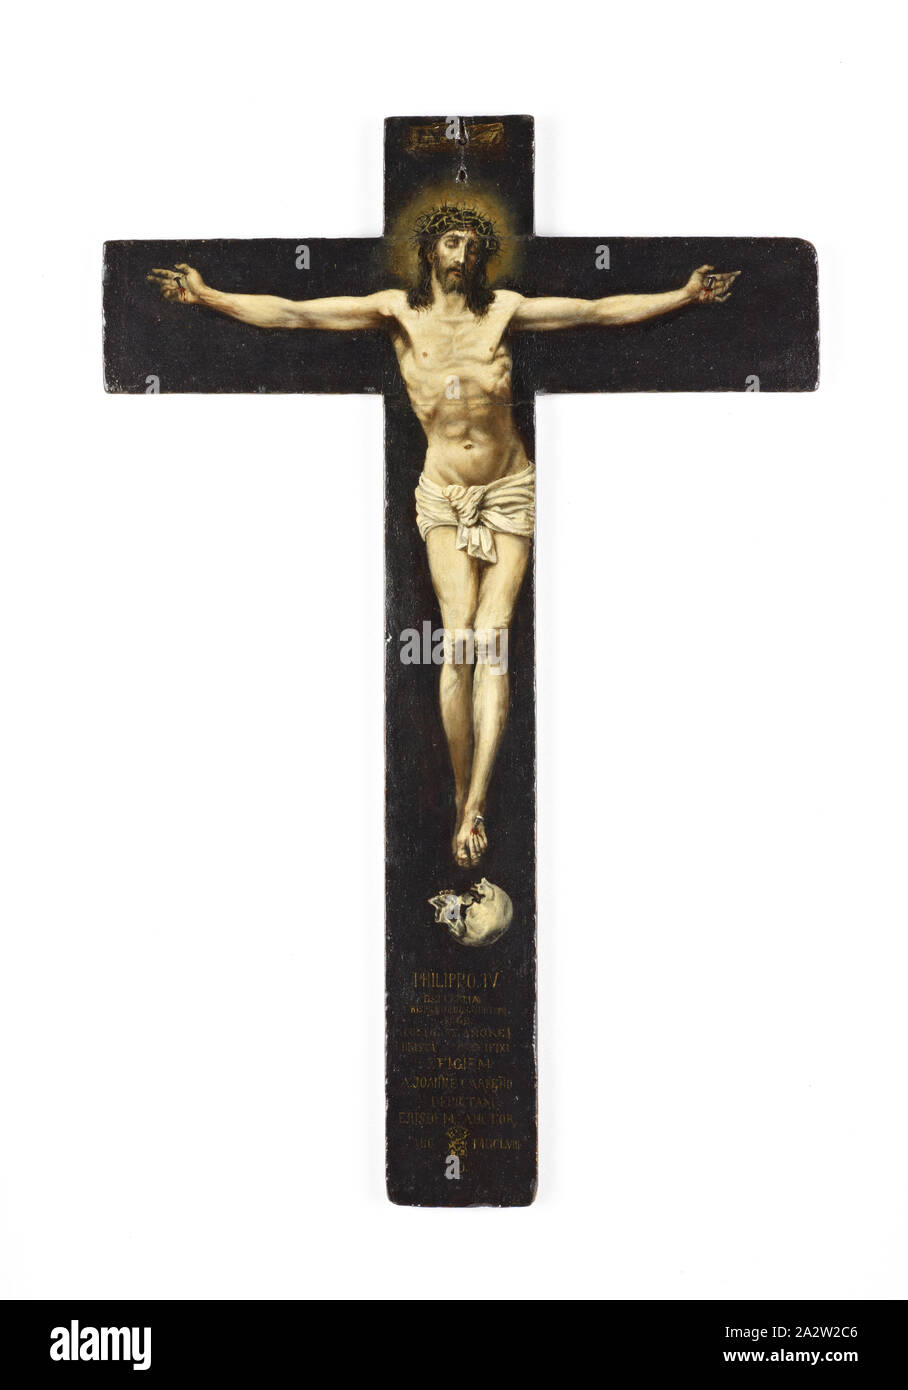 Crucifijo, Juan Carreño de Miranda (Español, 1614-1685), 1658, óleo sobre panel, 19 x 12-1/2 pulg., inscrita en la parte inferior de la cruz: PHILIPPO. IV., DEI GRATIA., HISPANORUM. GENTIUM., REGE., culto. ET. AMOREI, Christi, CRUCIFIXI EFIGIEM, A. JOANNE Carreño, DEPICTAM, ejusdem. AUCTOR, ANO MDCLVIII, L.D., pintura y escultura europea antes de 1800 Foto de stock